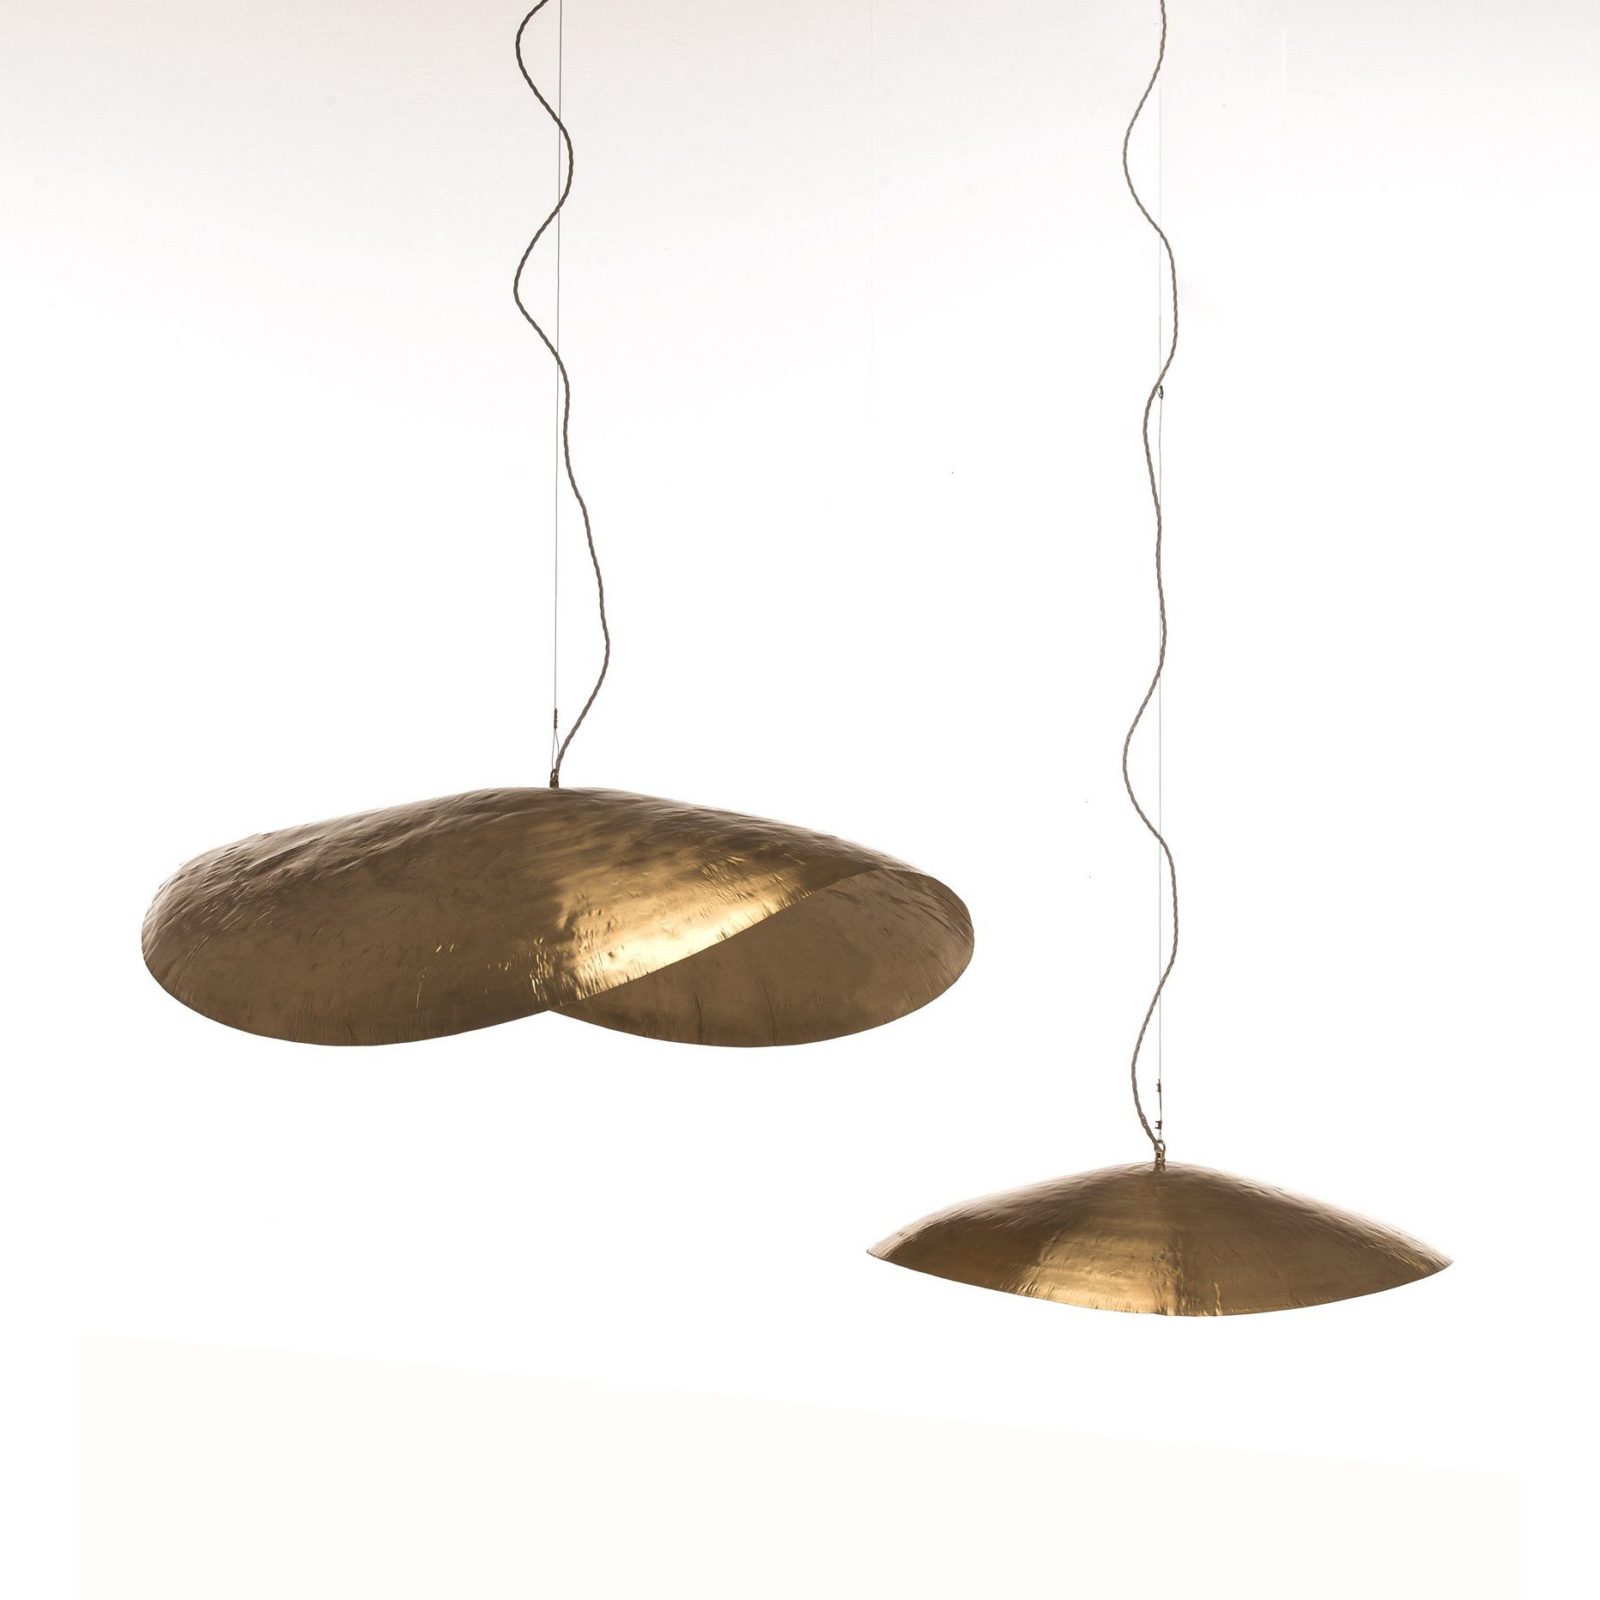 Hammered brass suspension light - Beat brass Pendant Lamp - mooielight